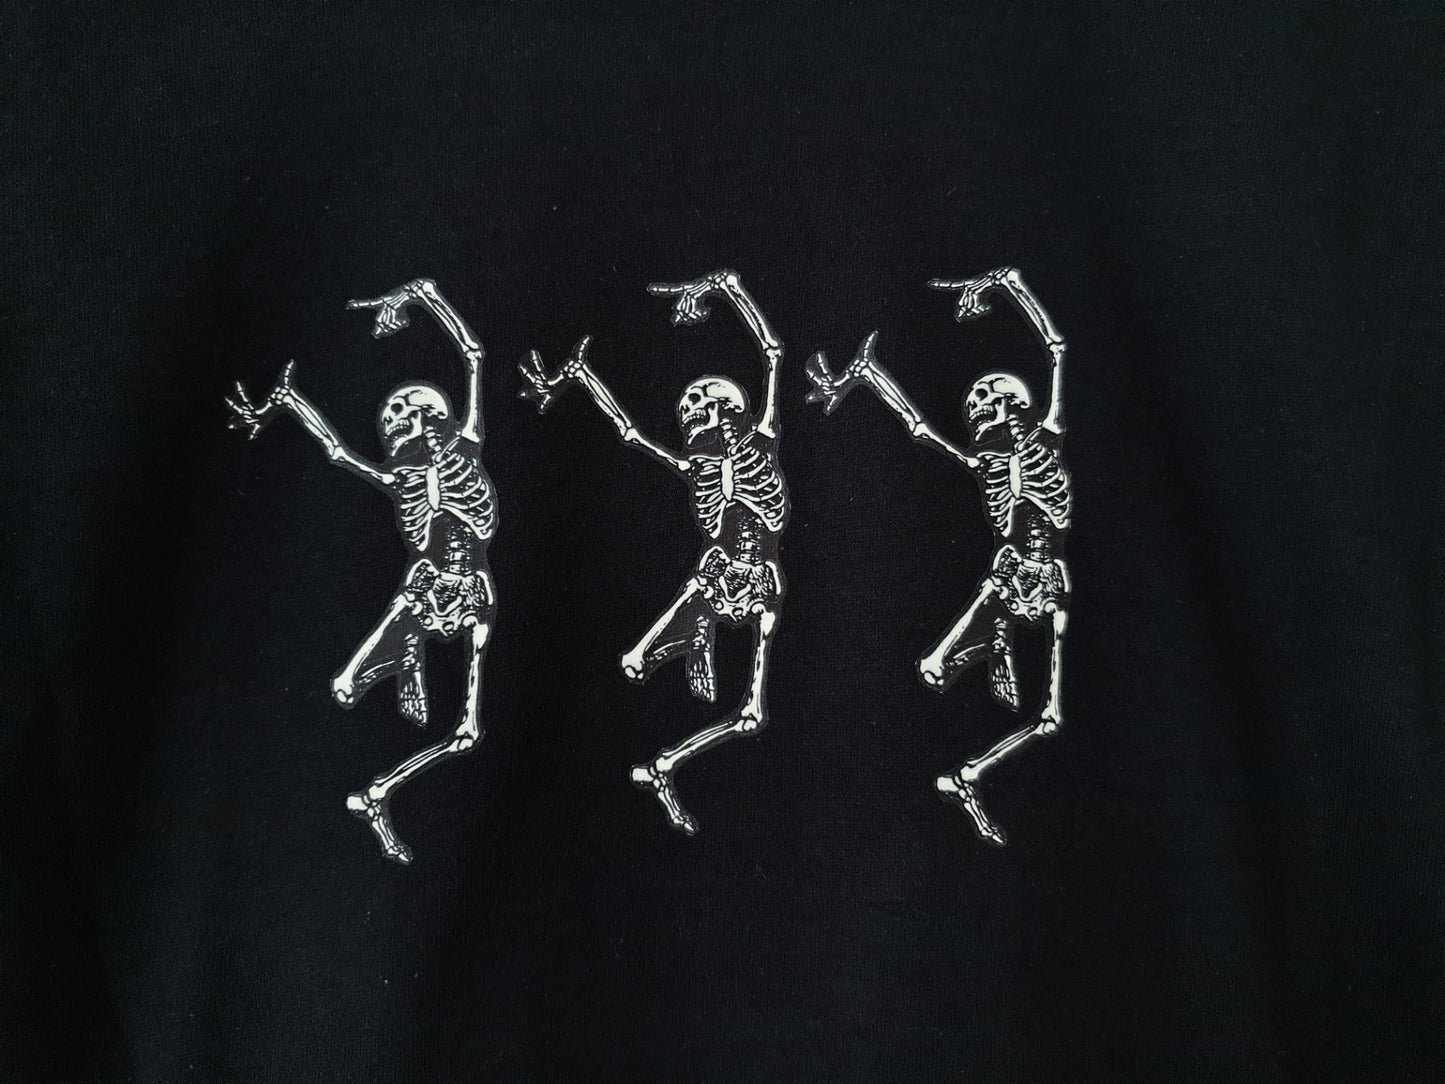 Hand Designed Spooky Scary Skeleton Shirt